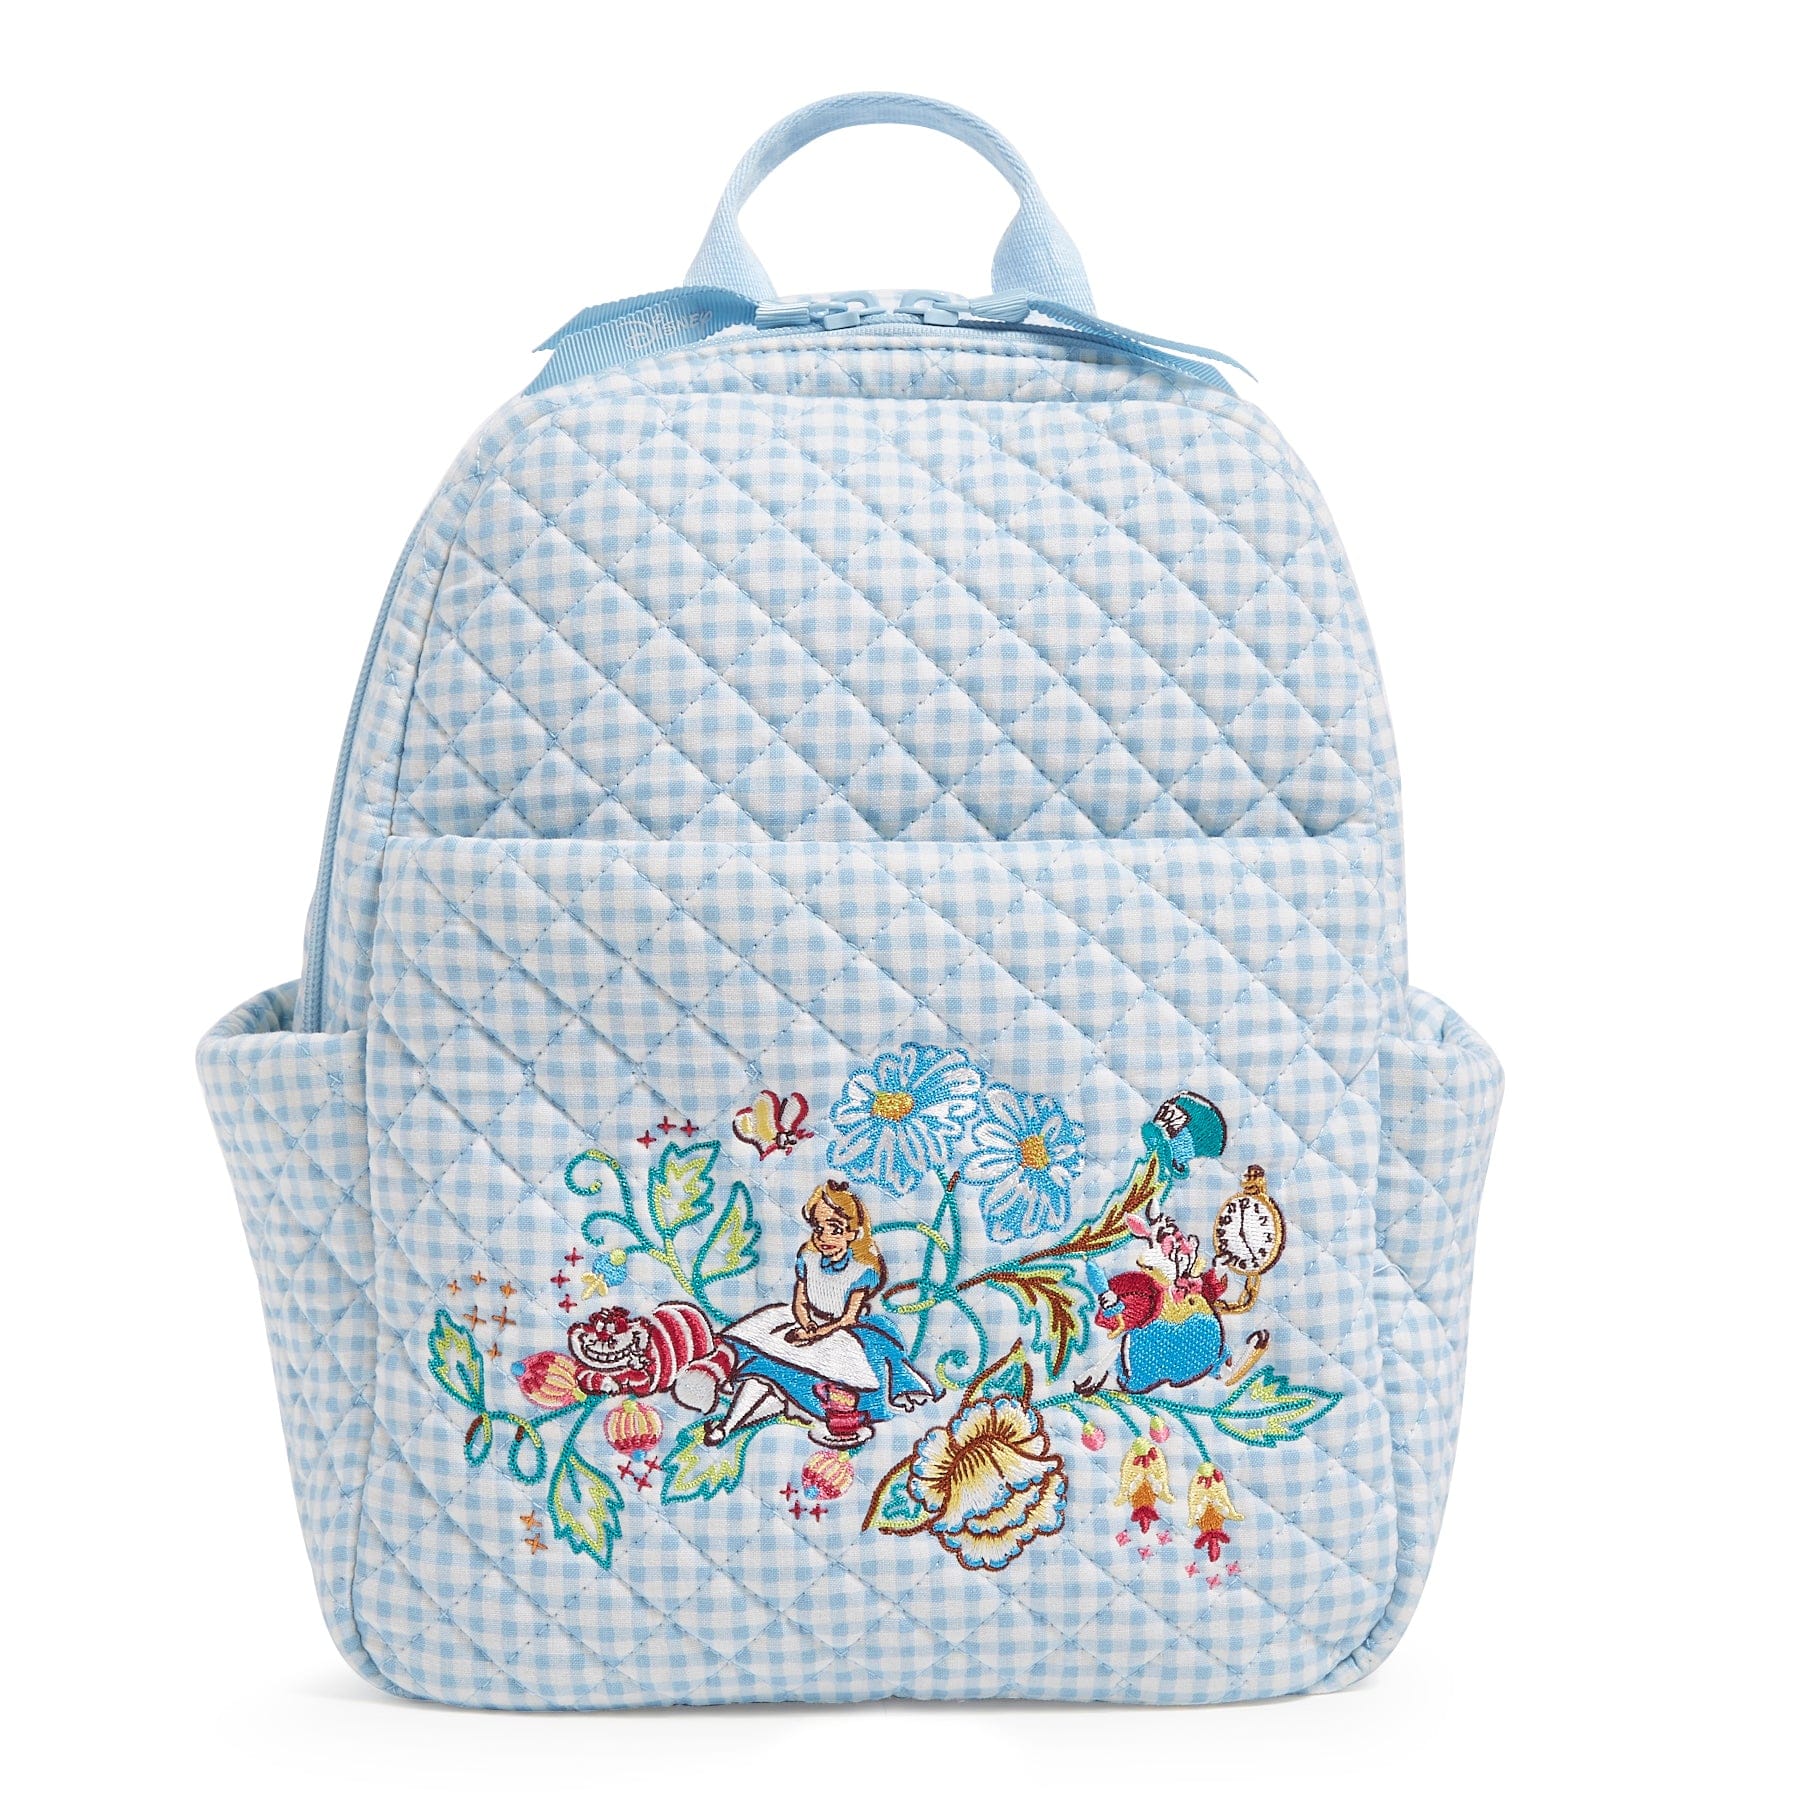 Disney Small Backpack-Disney Alice in Wonderland-Image 1-Vera Bradley